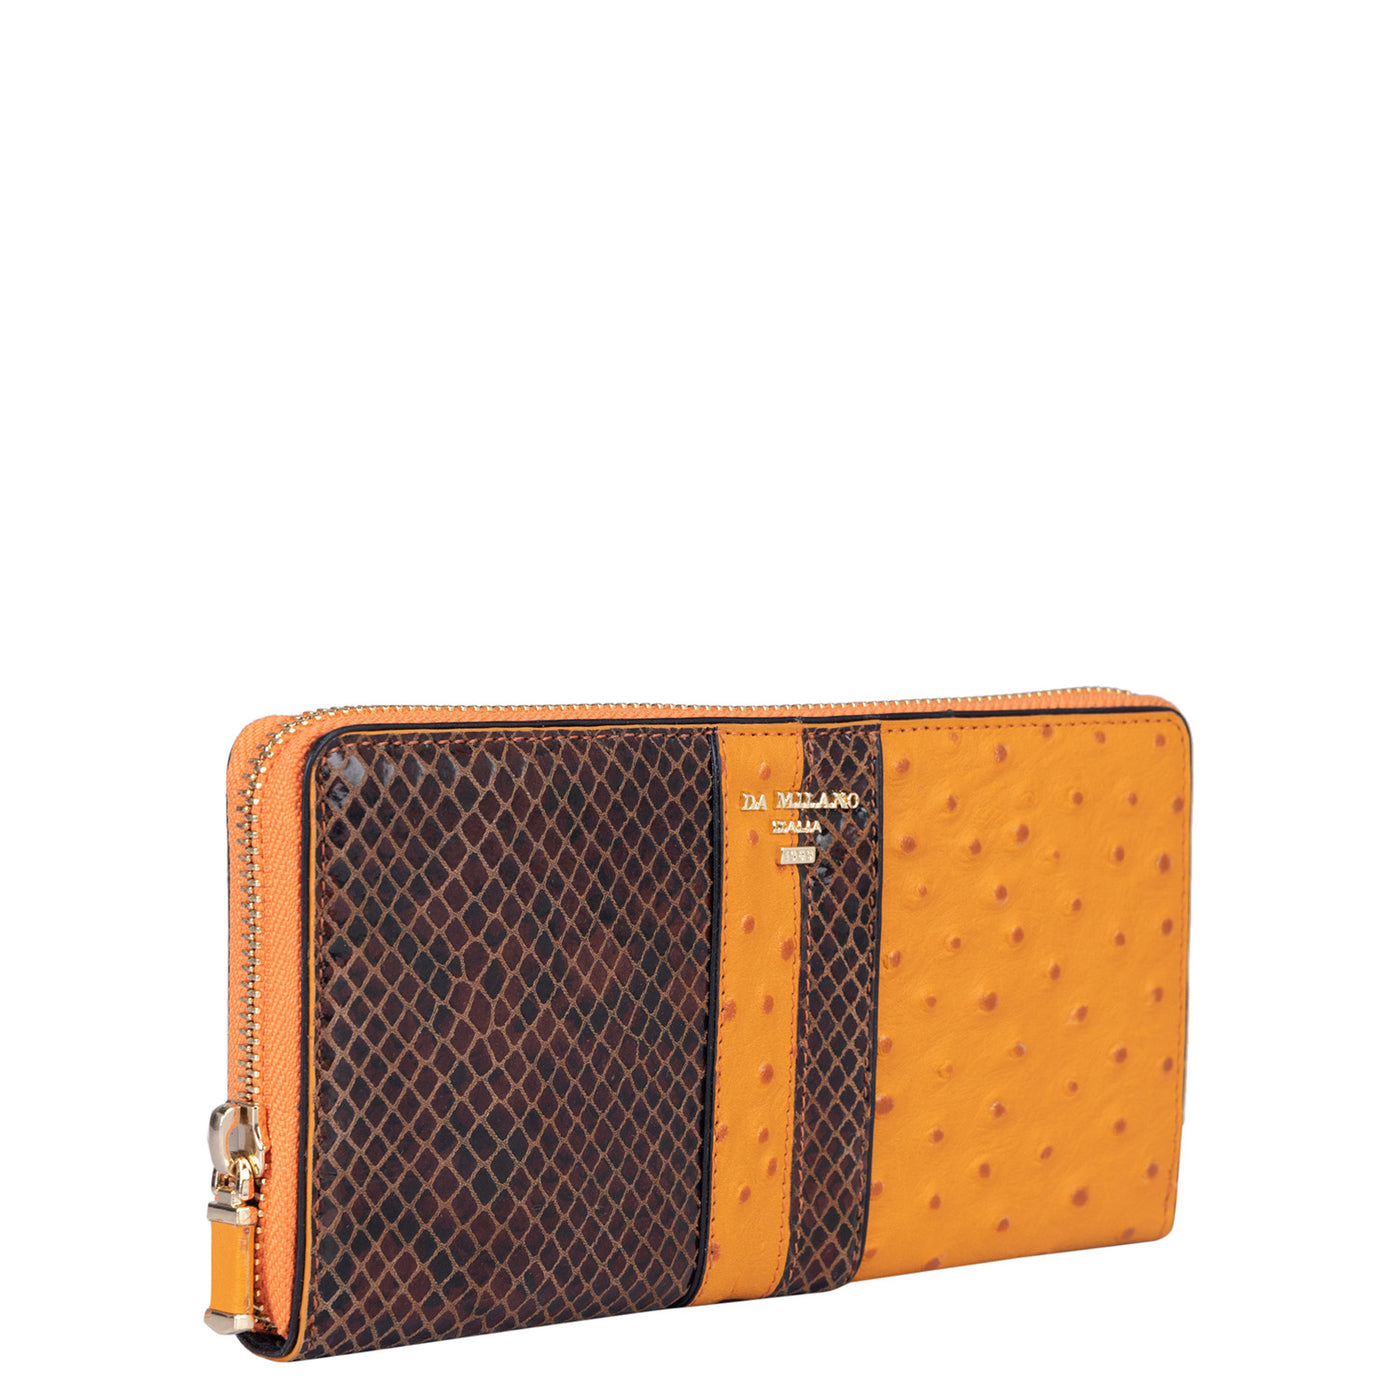 Ostrich Snake Leather Ladies Wallet - Orange